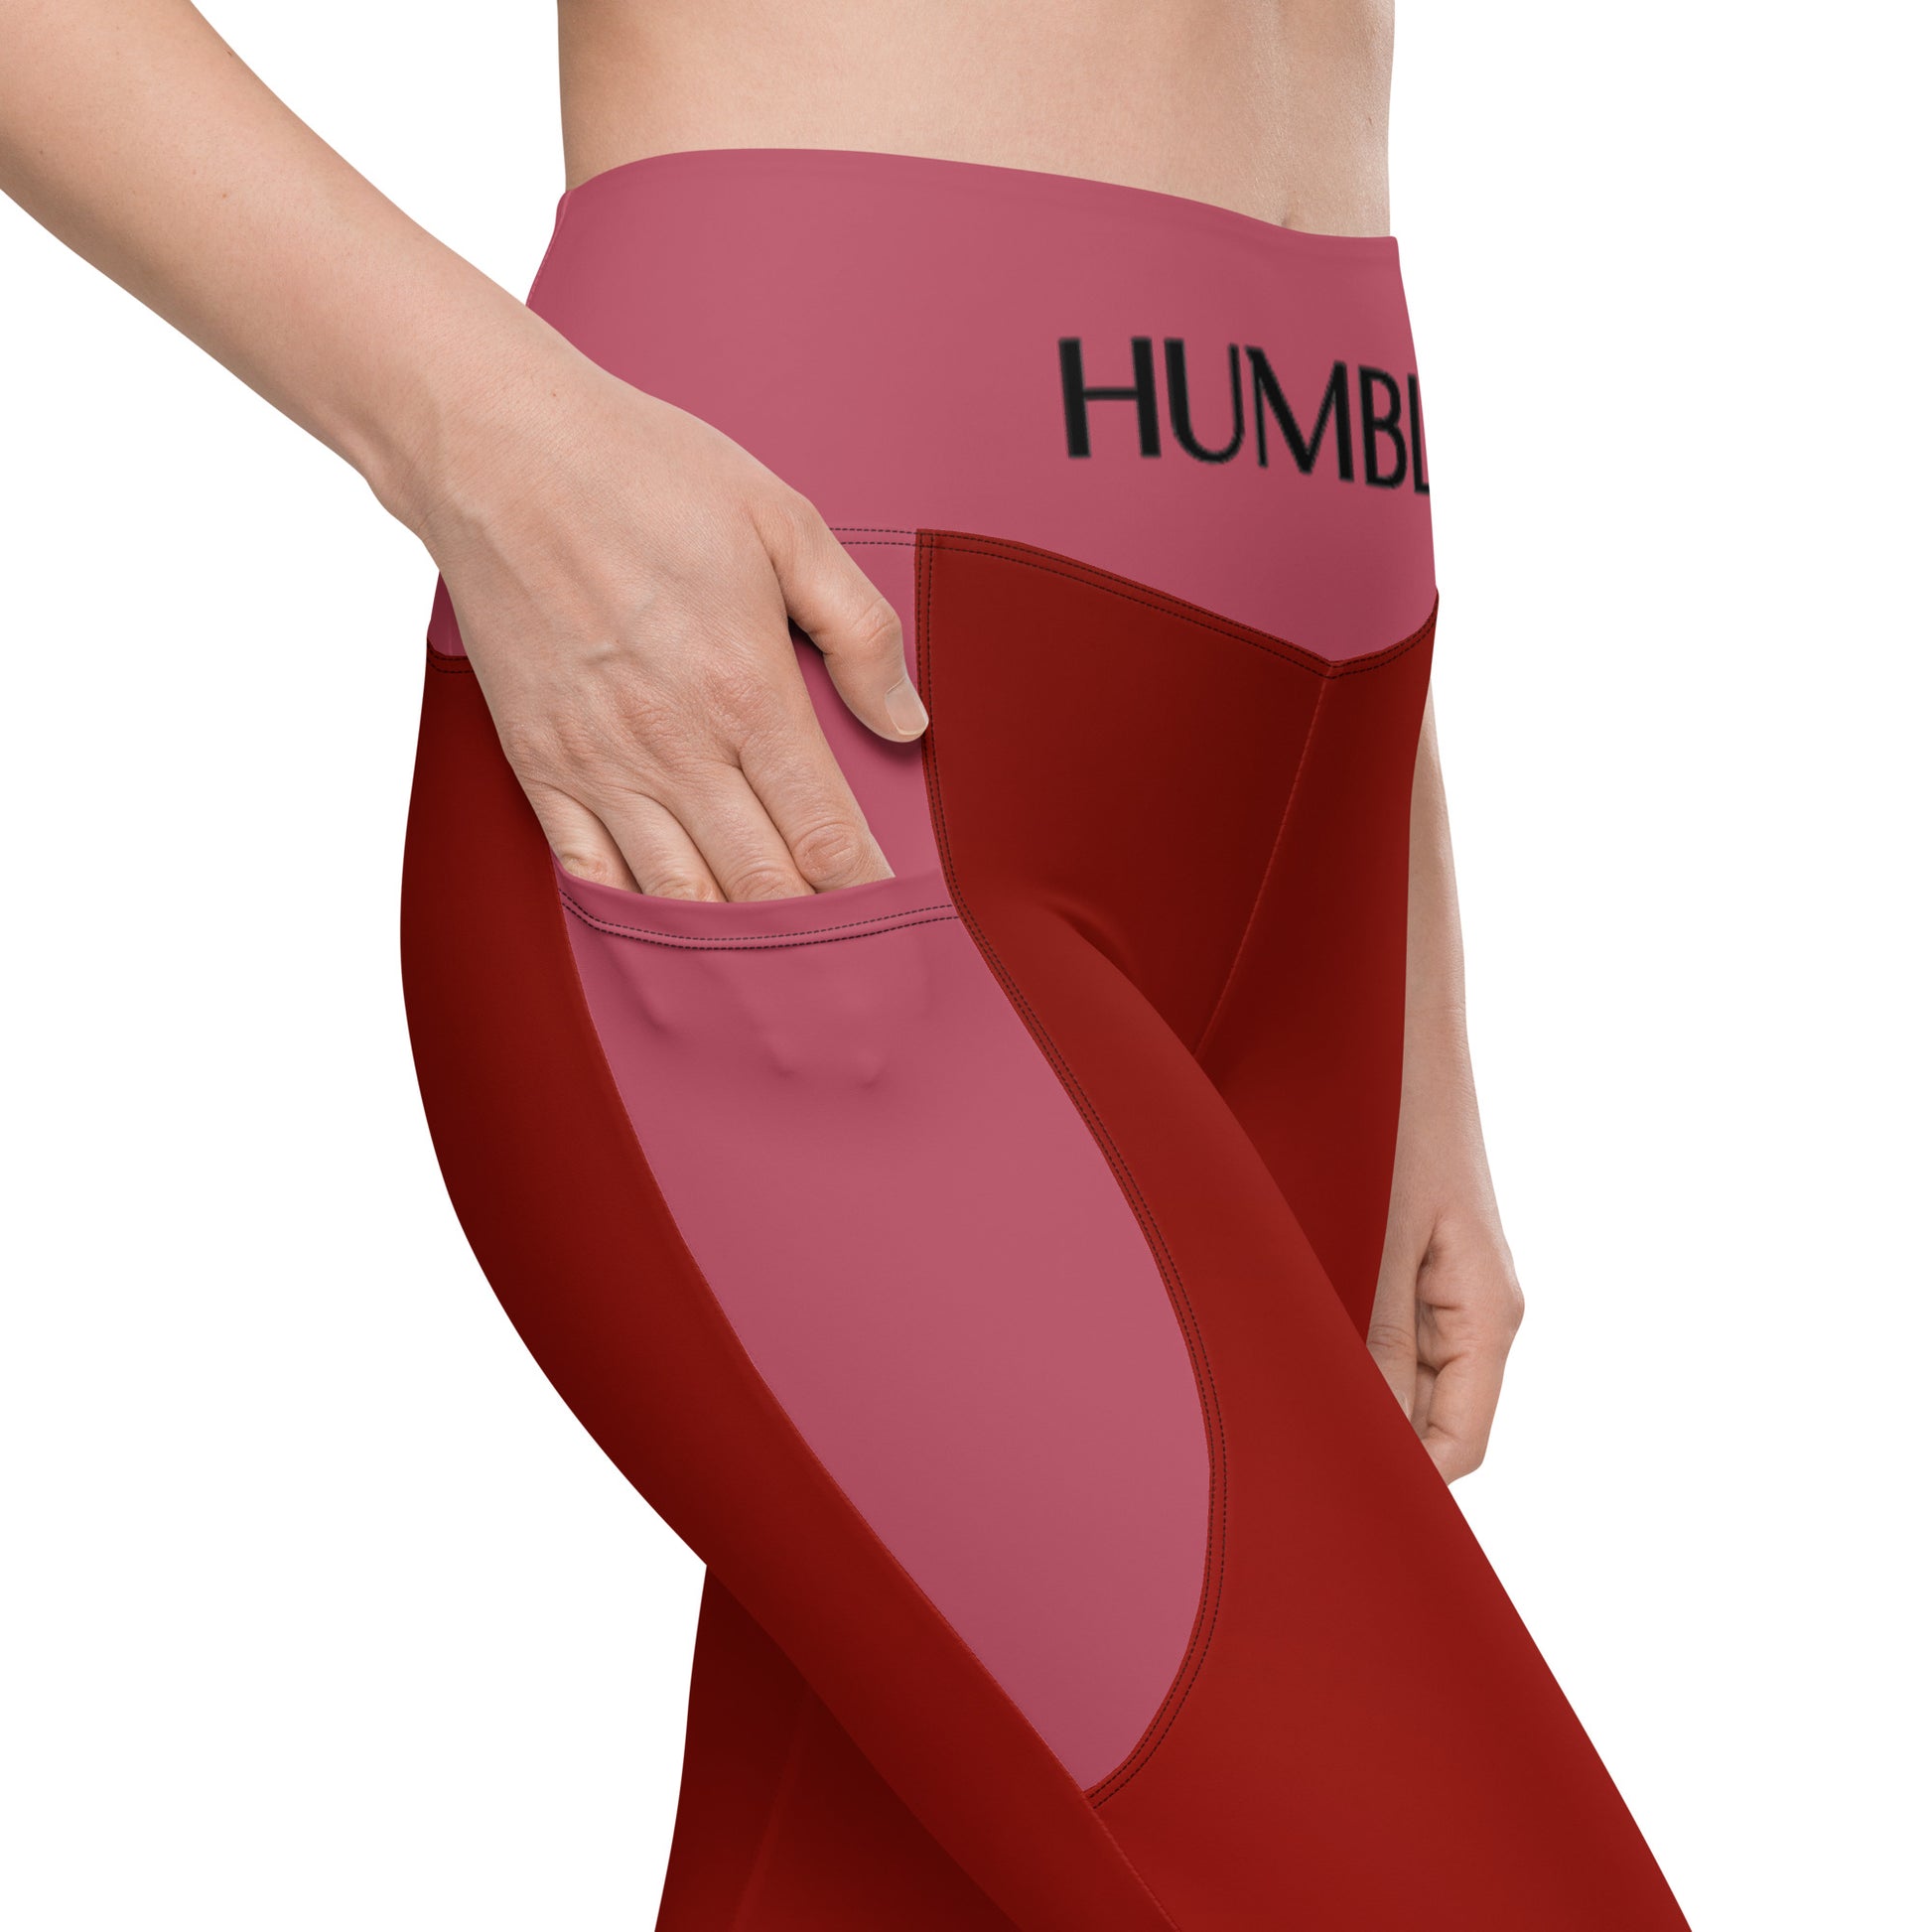 Humble Sportswear™ Women's Deep Red Active Compression Leggings - Mireille Fine Art